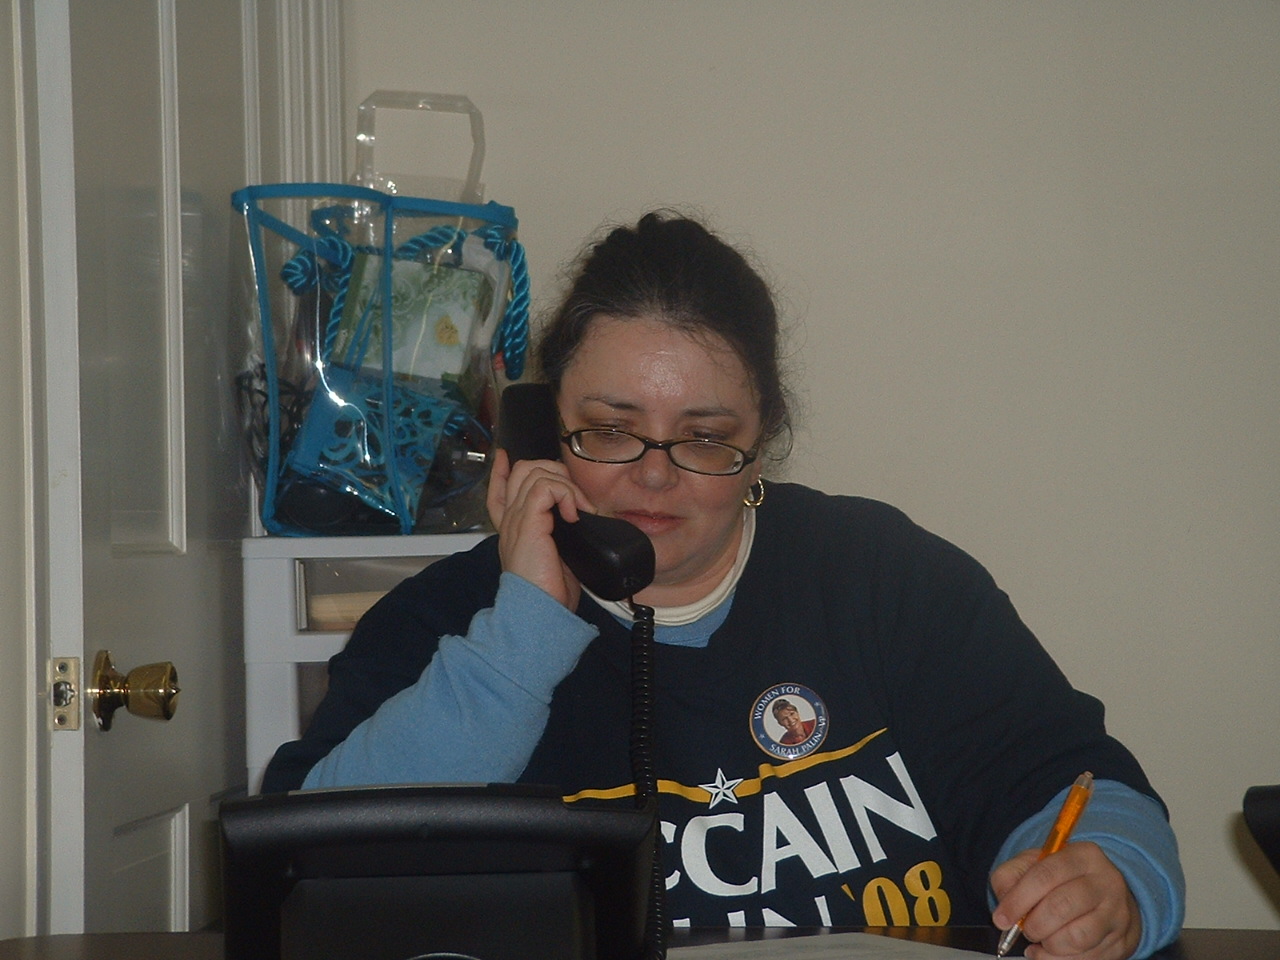 Here's Maria hard at work, making the phone calls to help John McCain carry Pennsylvania - or so she hopes.